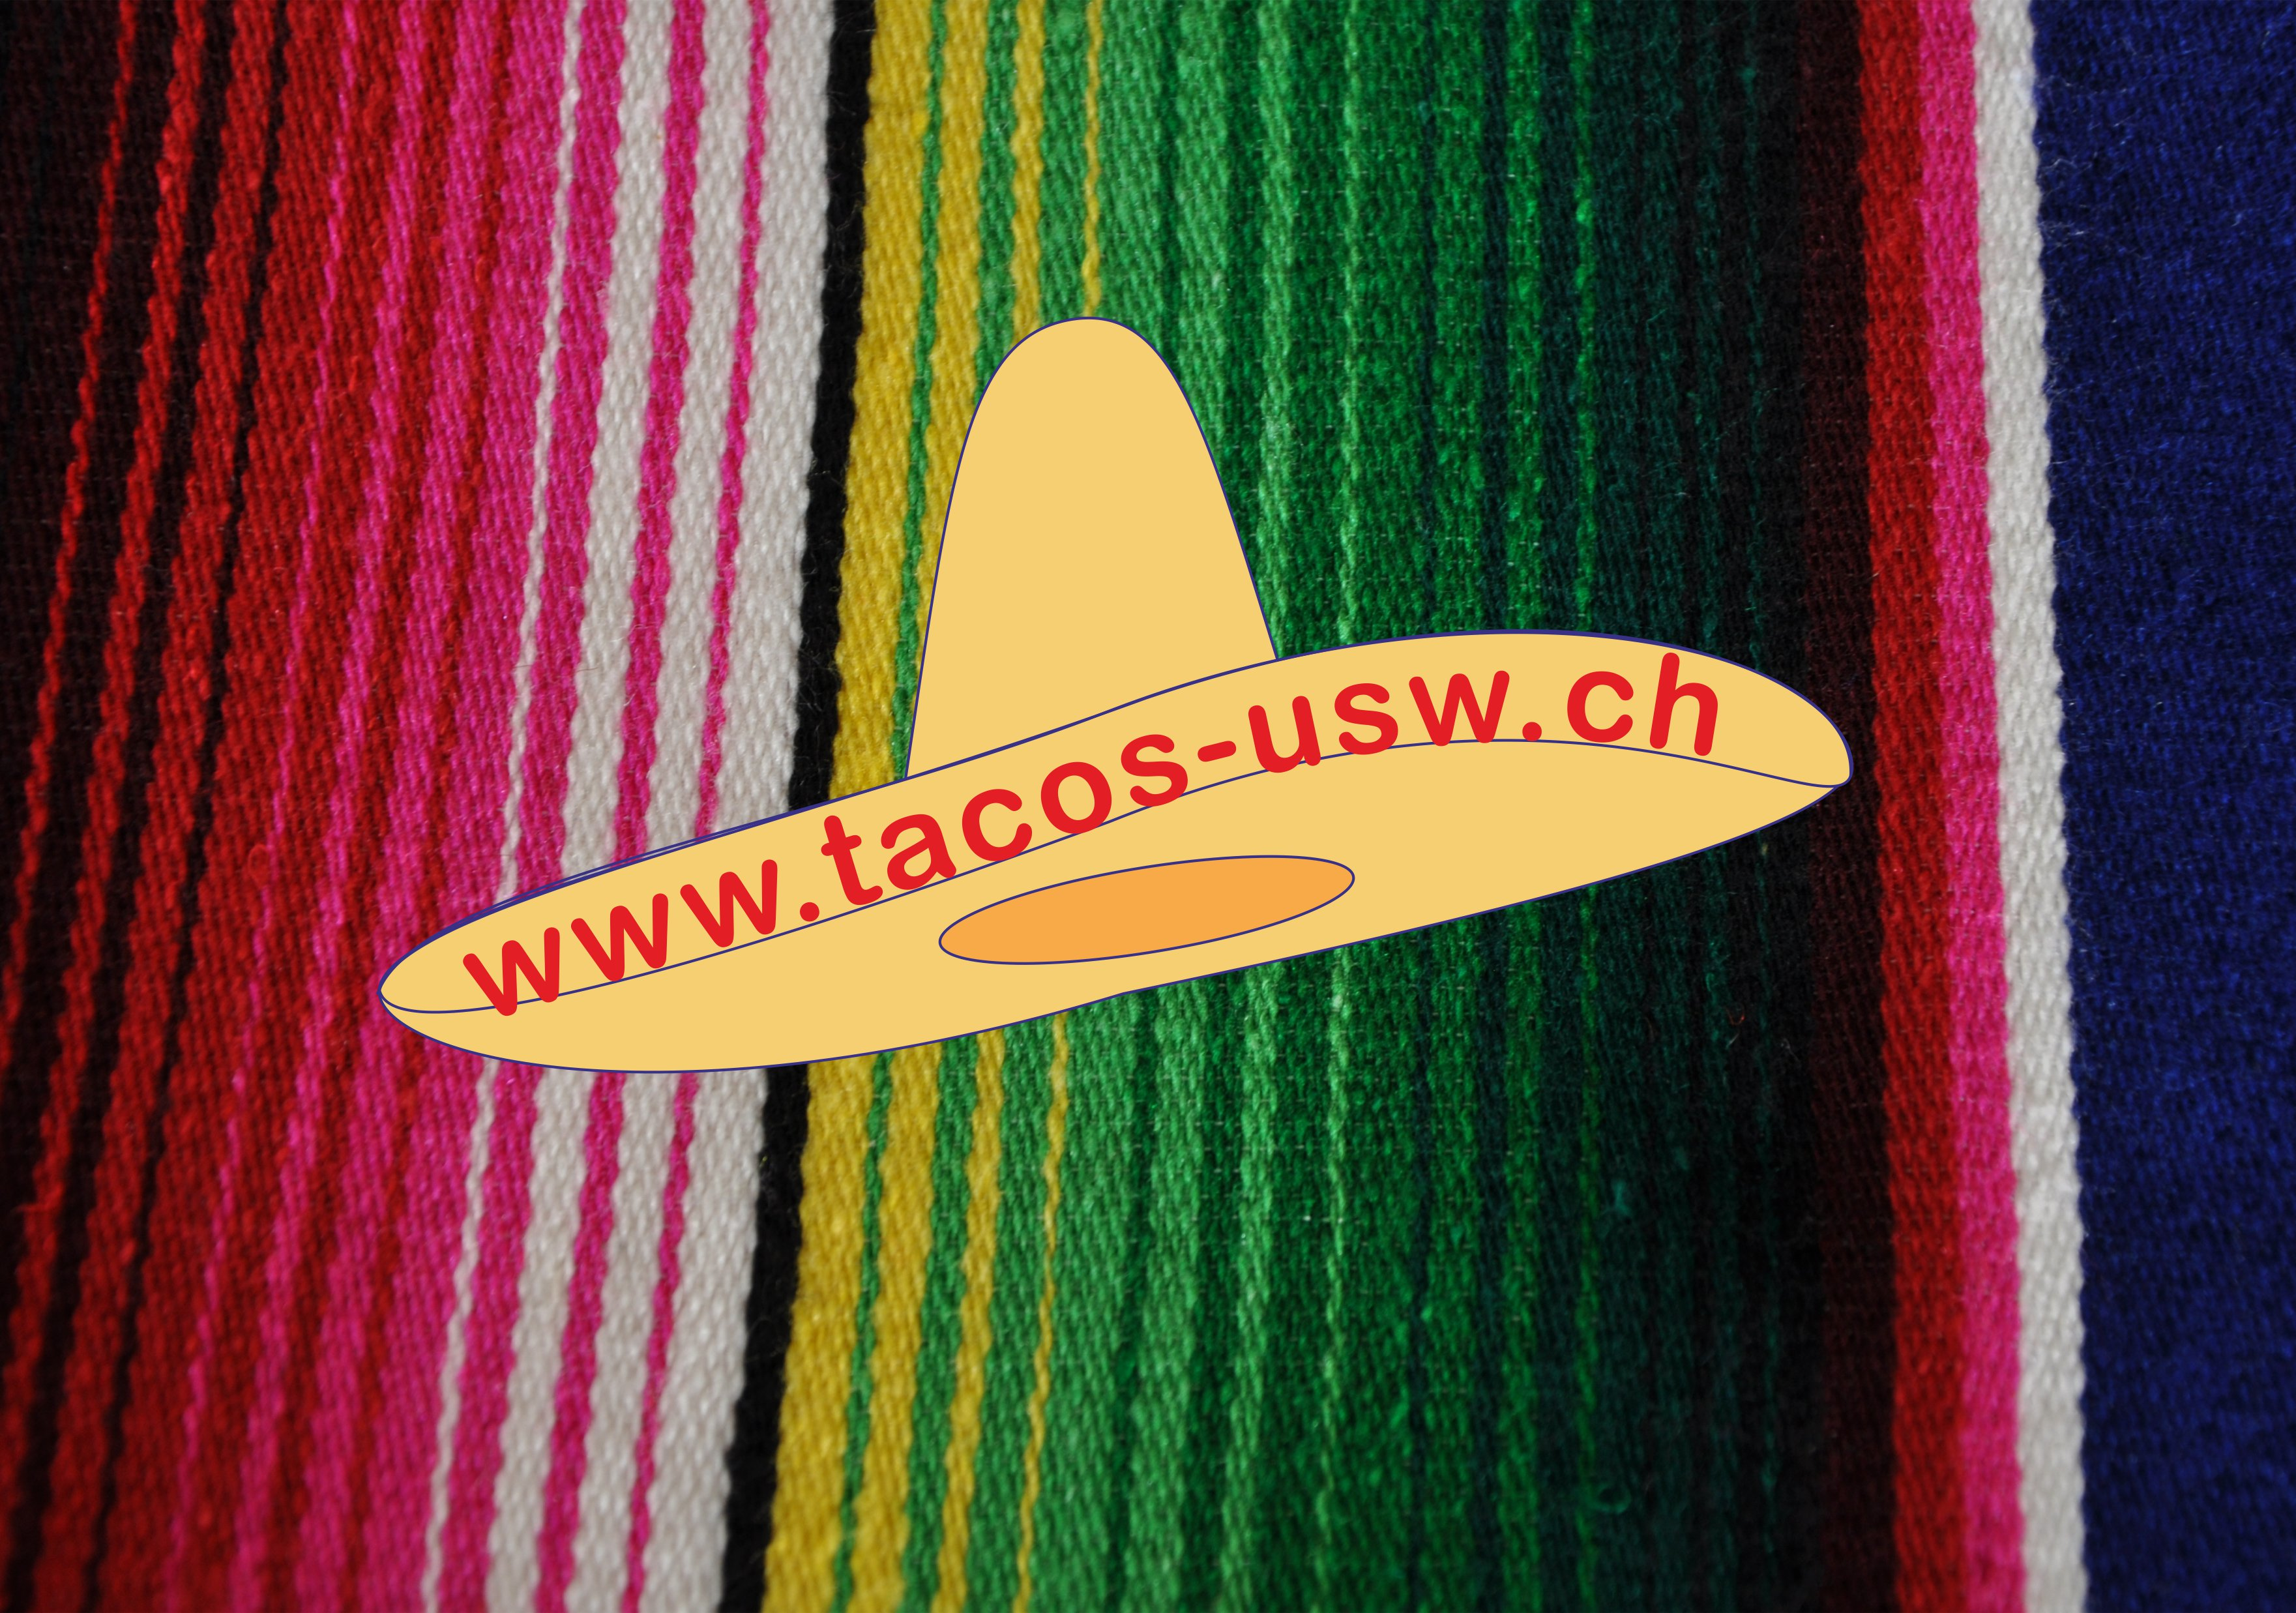 (c) Tacos-usw.ch